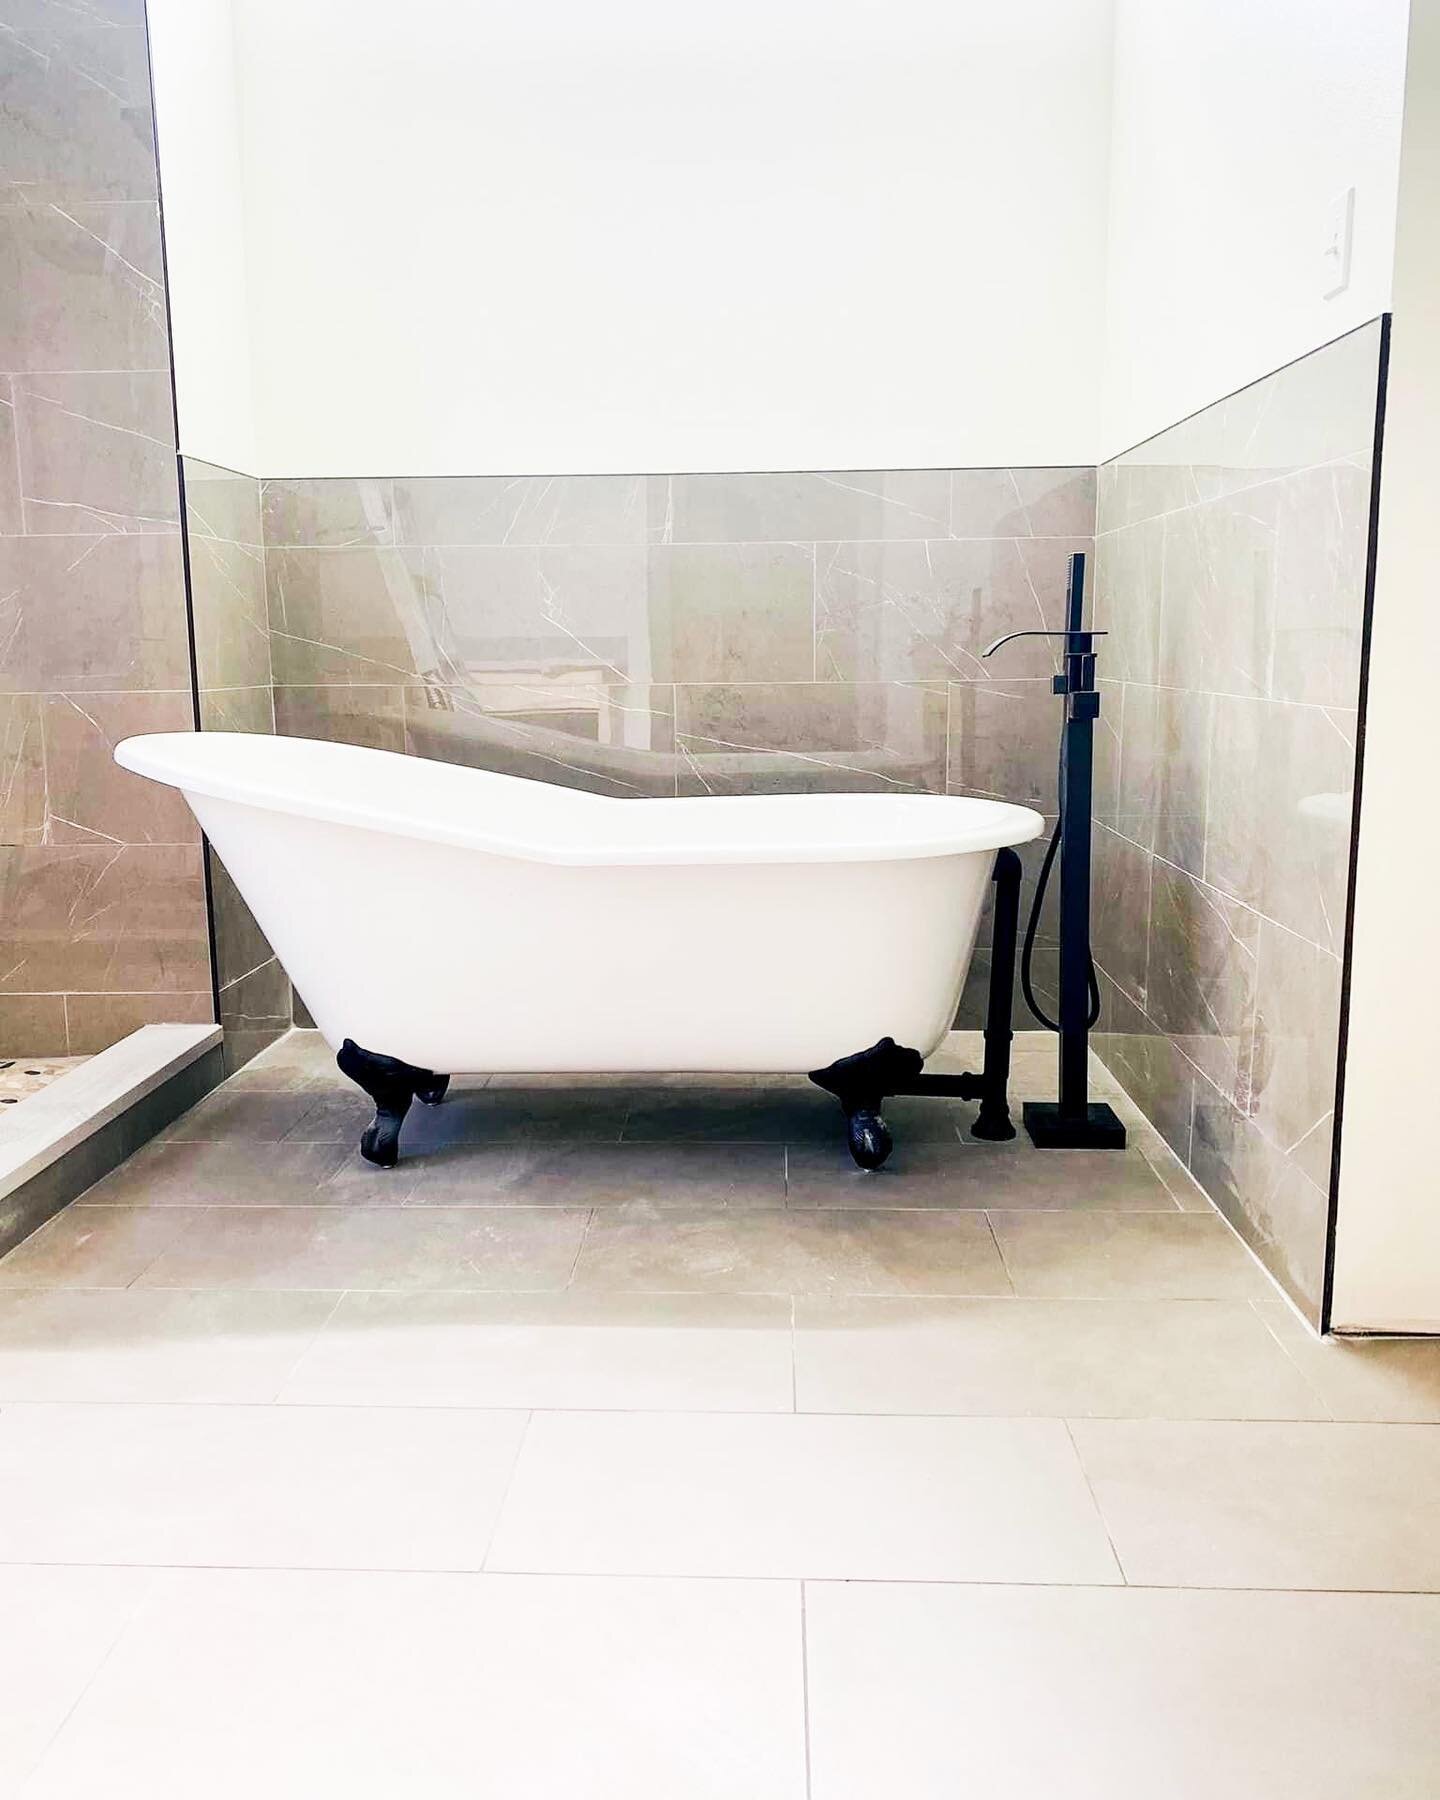 We love a good free standing tub 

#clawfoottub #bathroomremodel #batonrougerenovations #louisianarenovation #batonrougereno